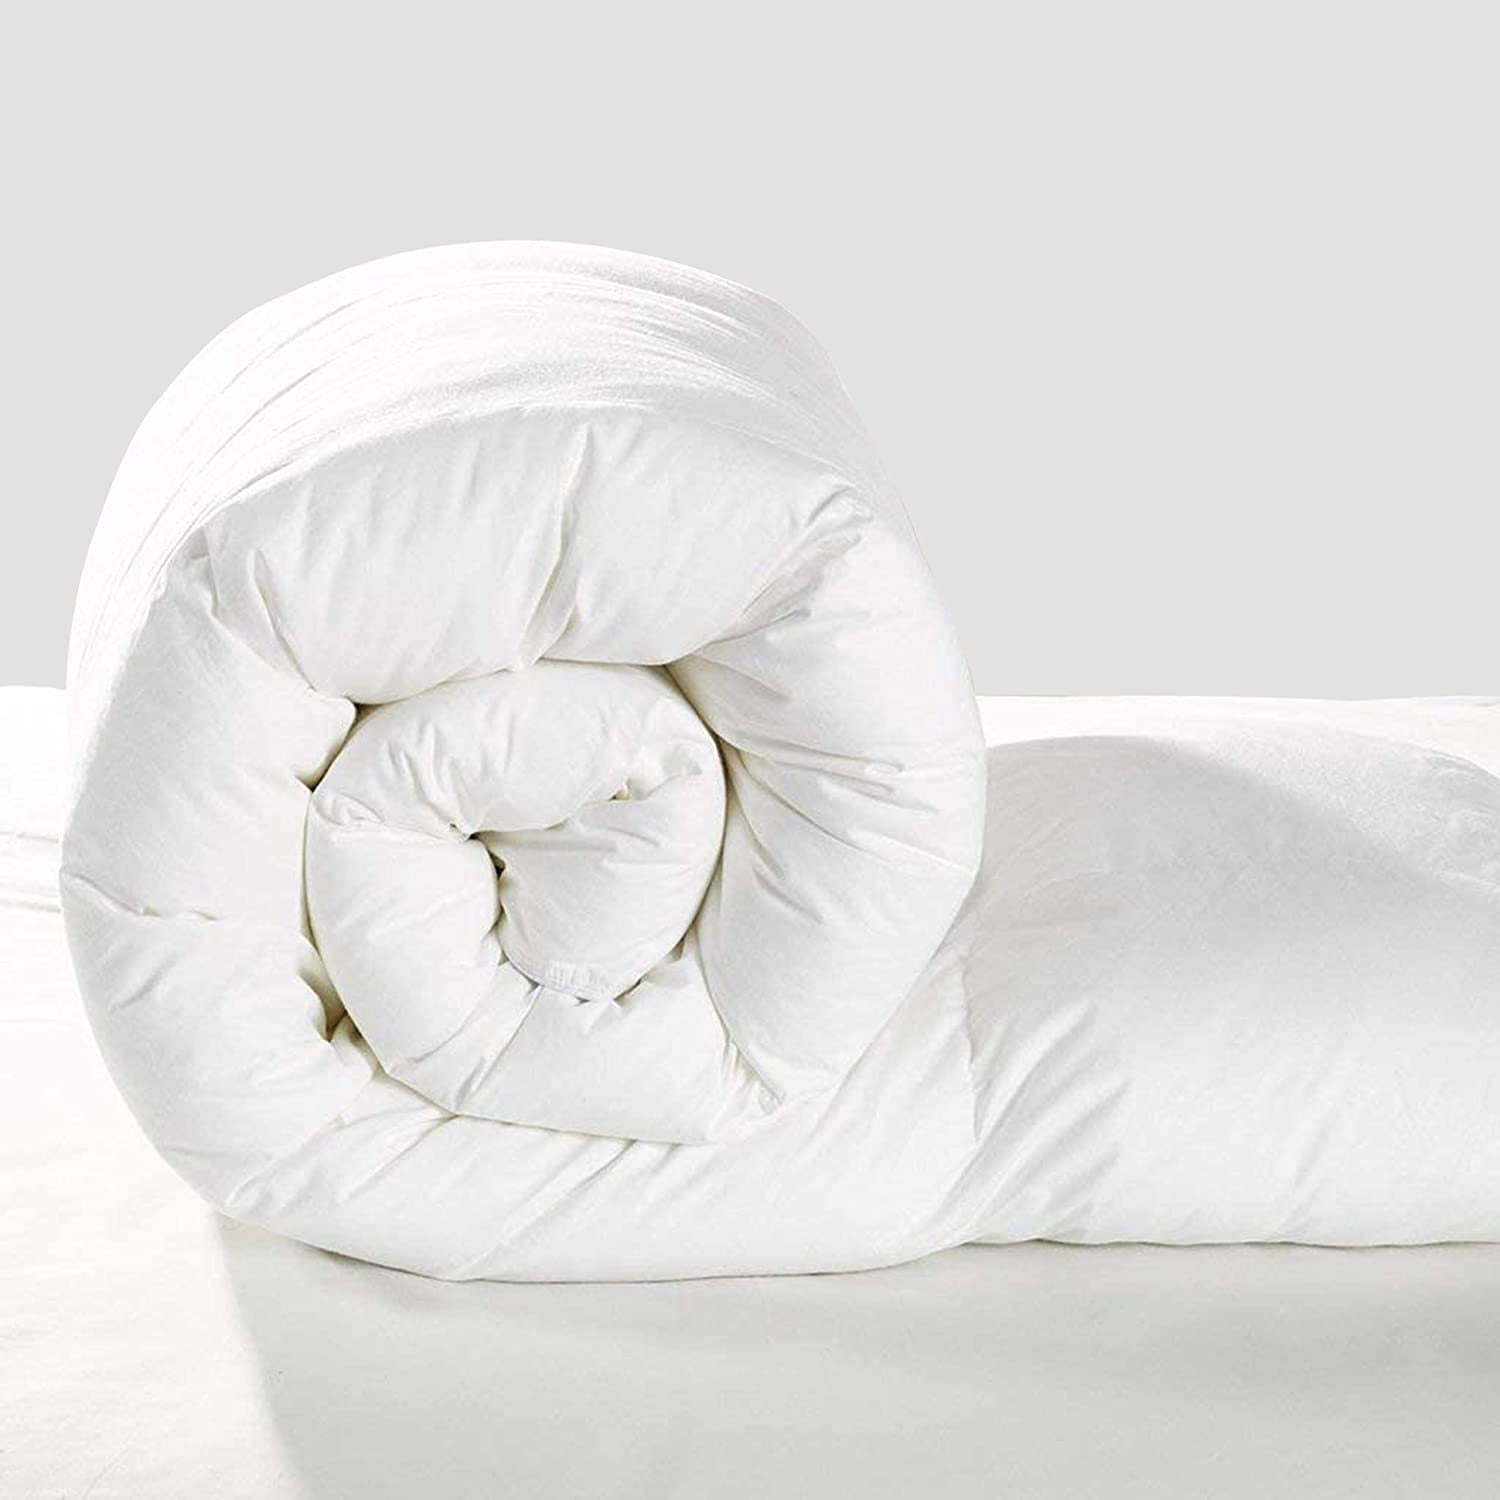 Details about   Silk Comforter Quilts Blanket Duvet Filling Bed Home Textile Bedclothes Warm New 